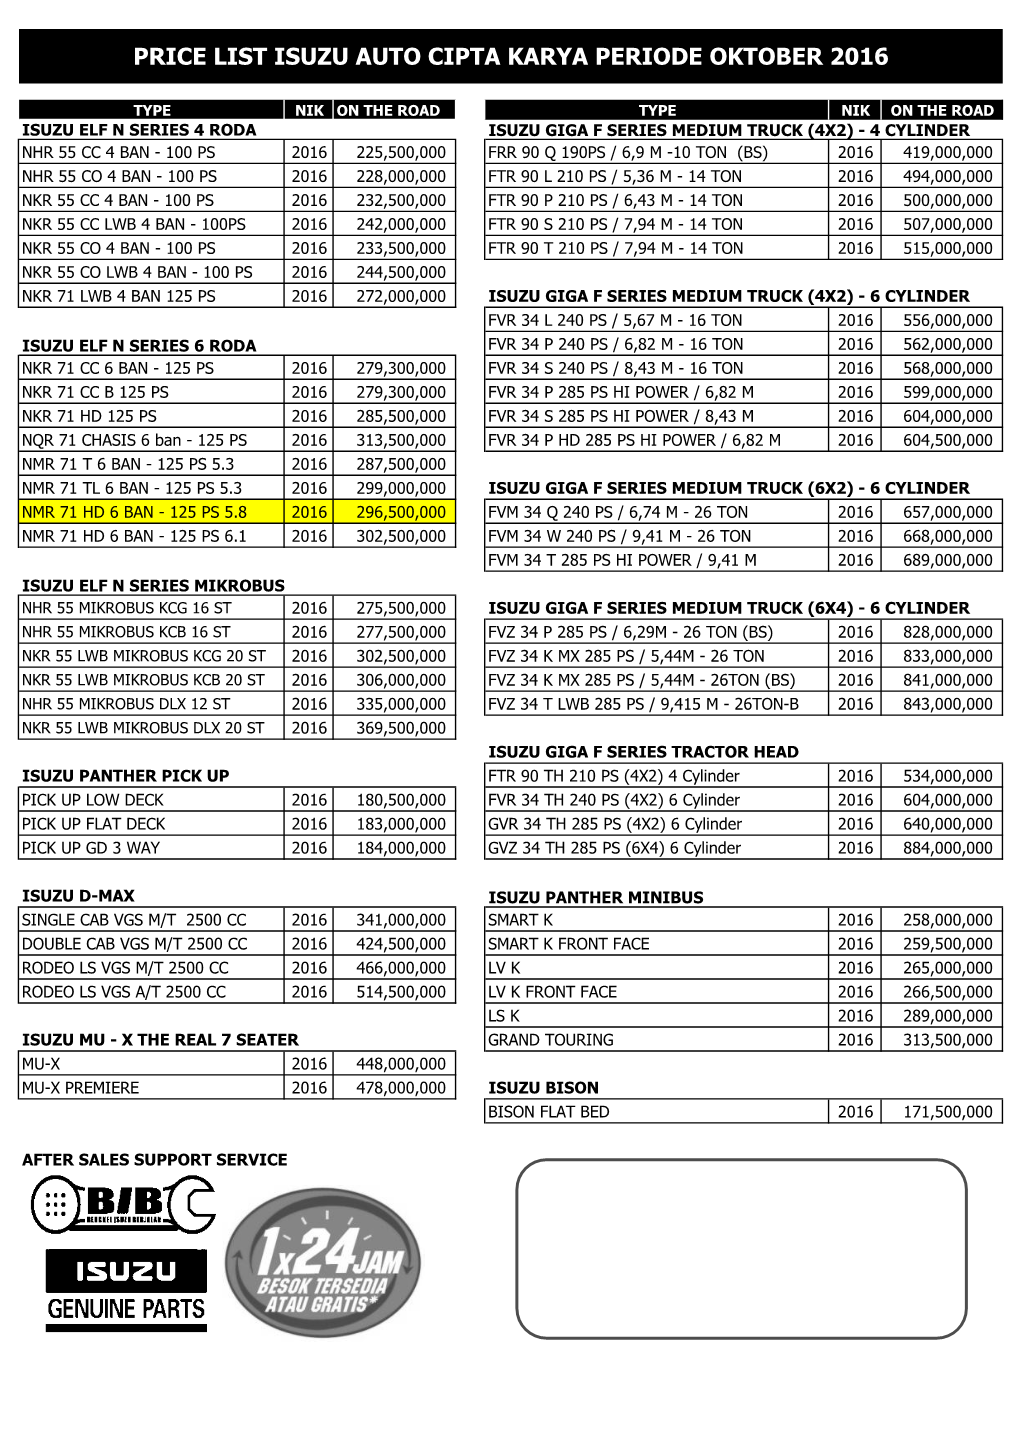 Price List Isuzu Auto Cipta Karya Periode Oktober 2016